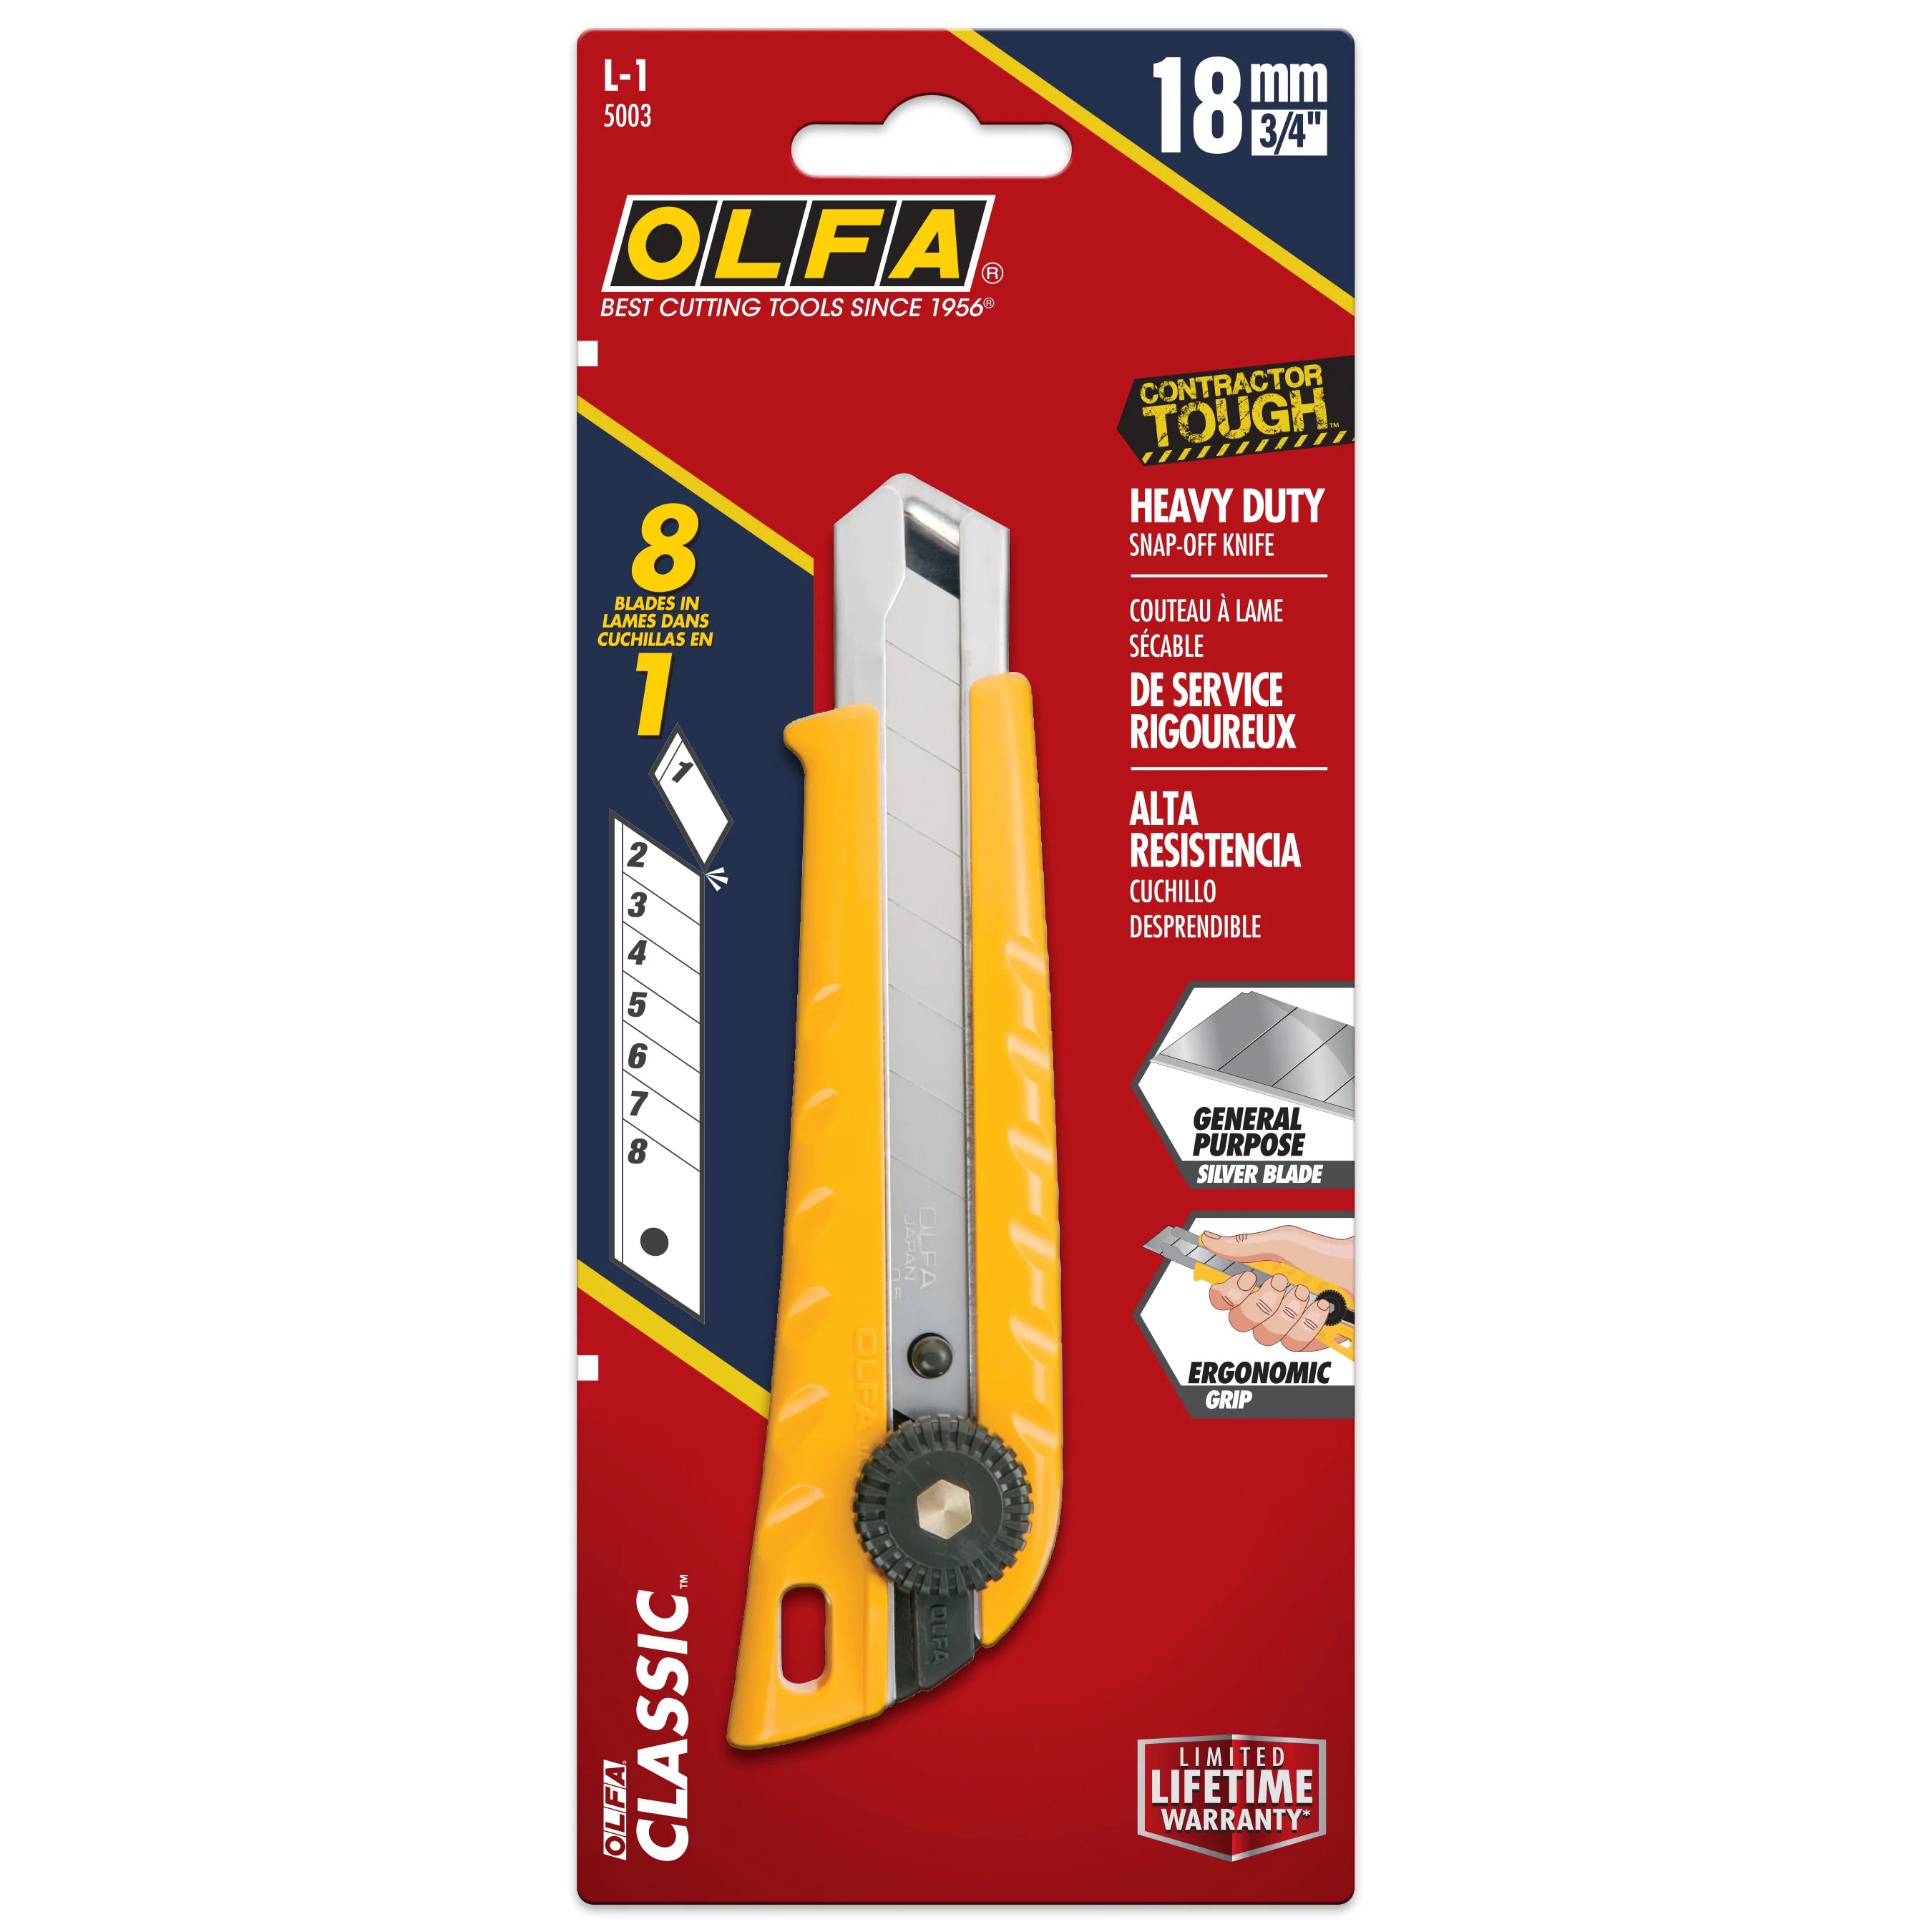 OLFA 18mm Ratchet Lock Utility Knife L-1